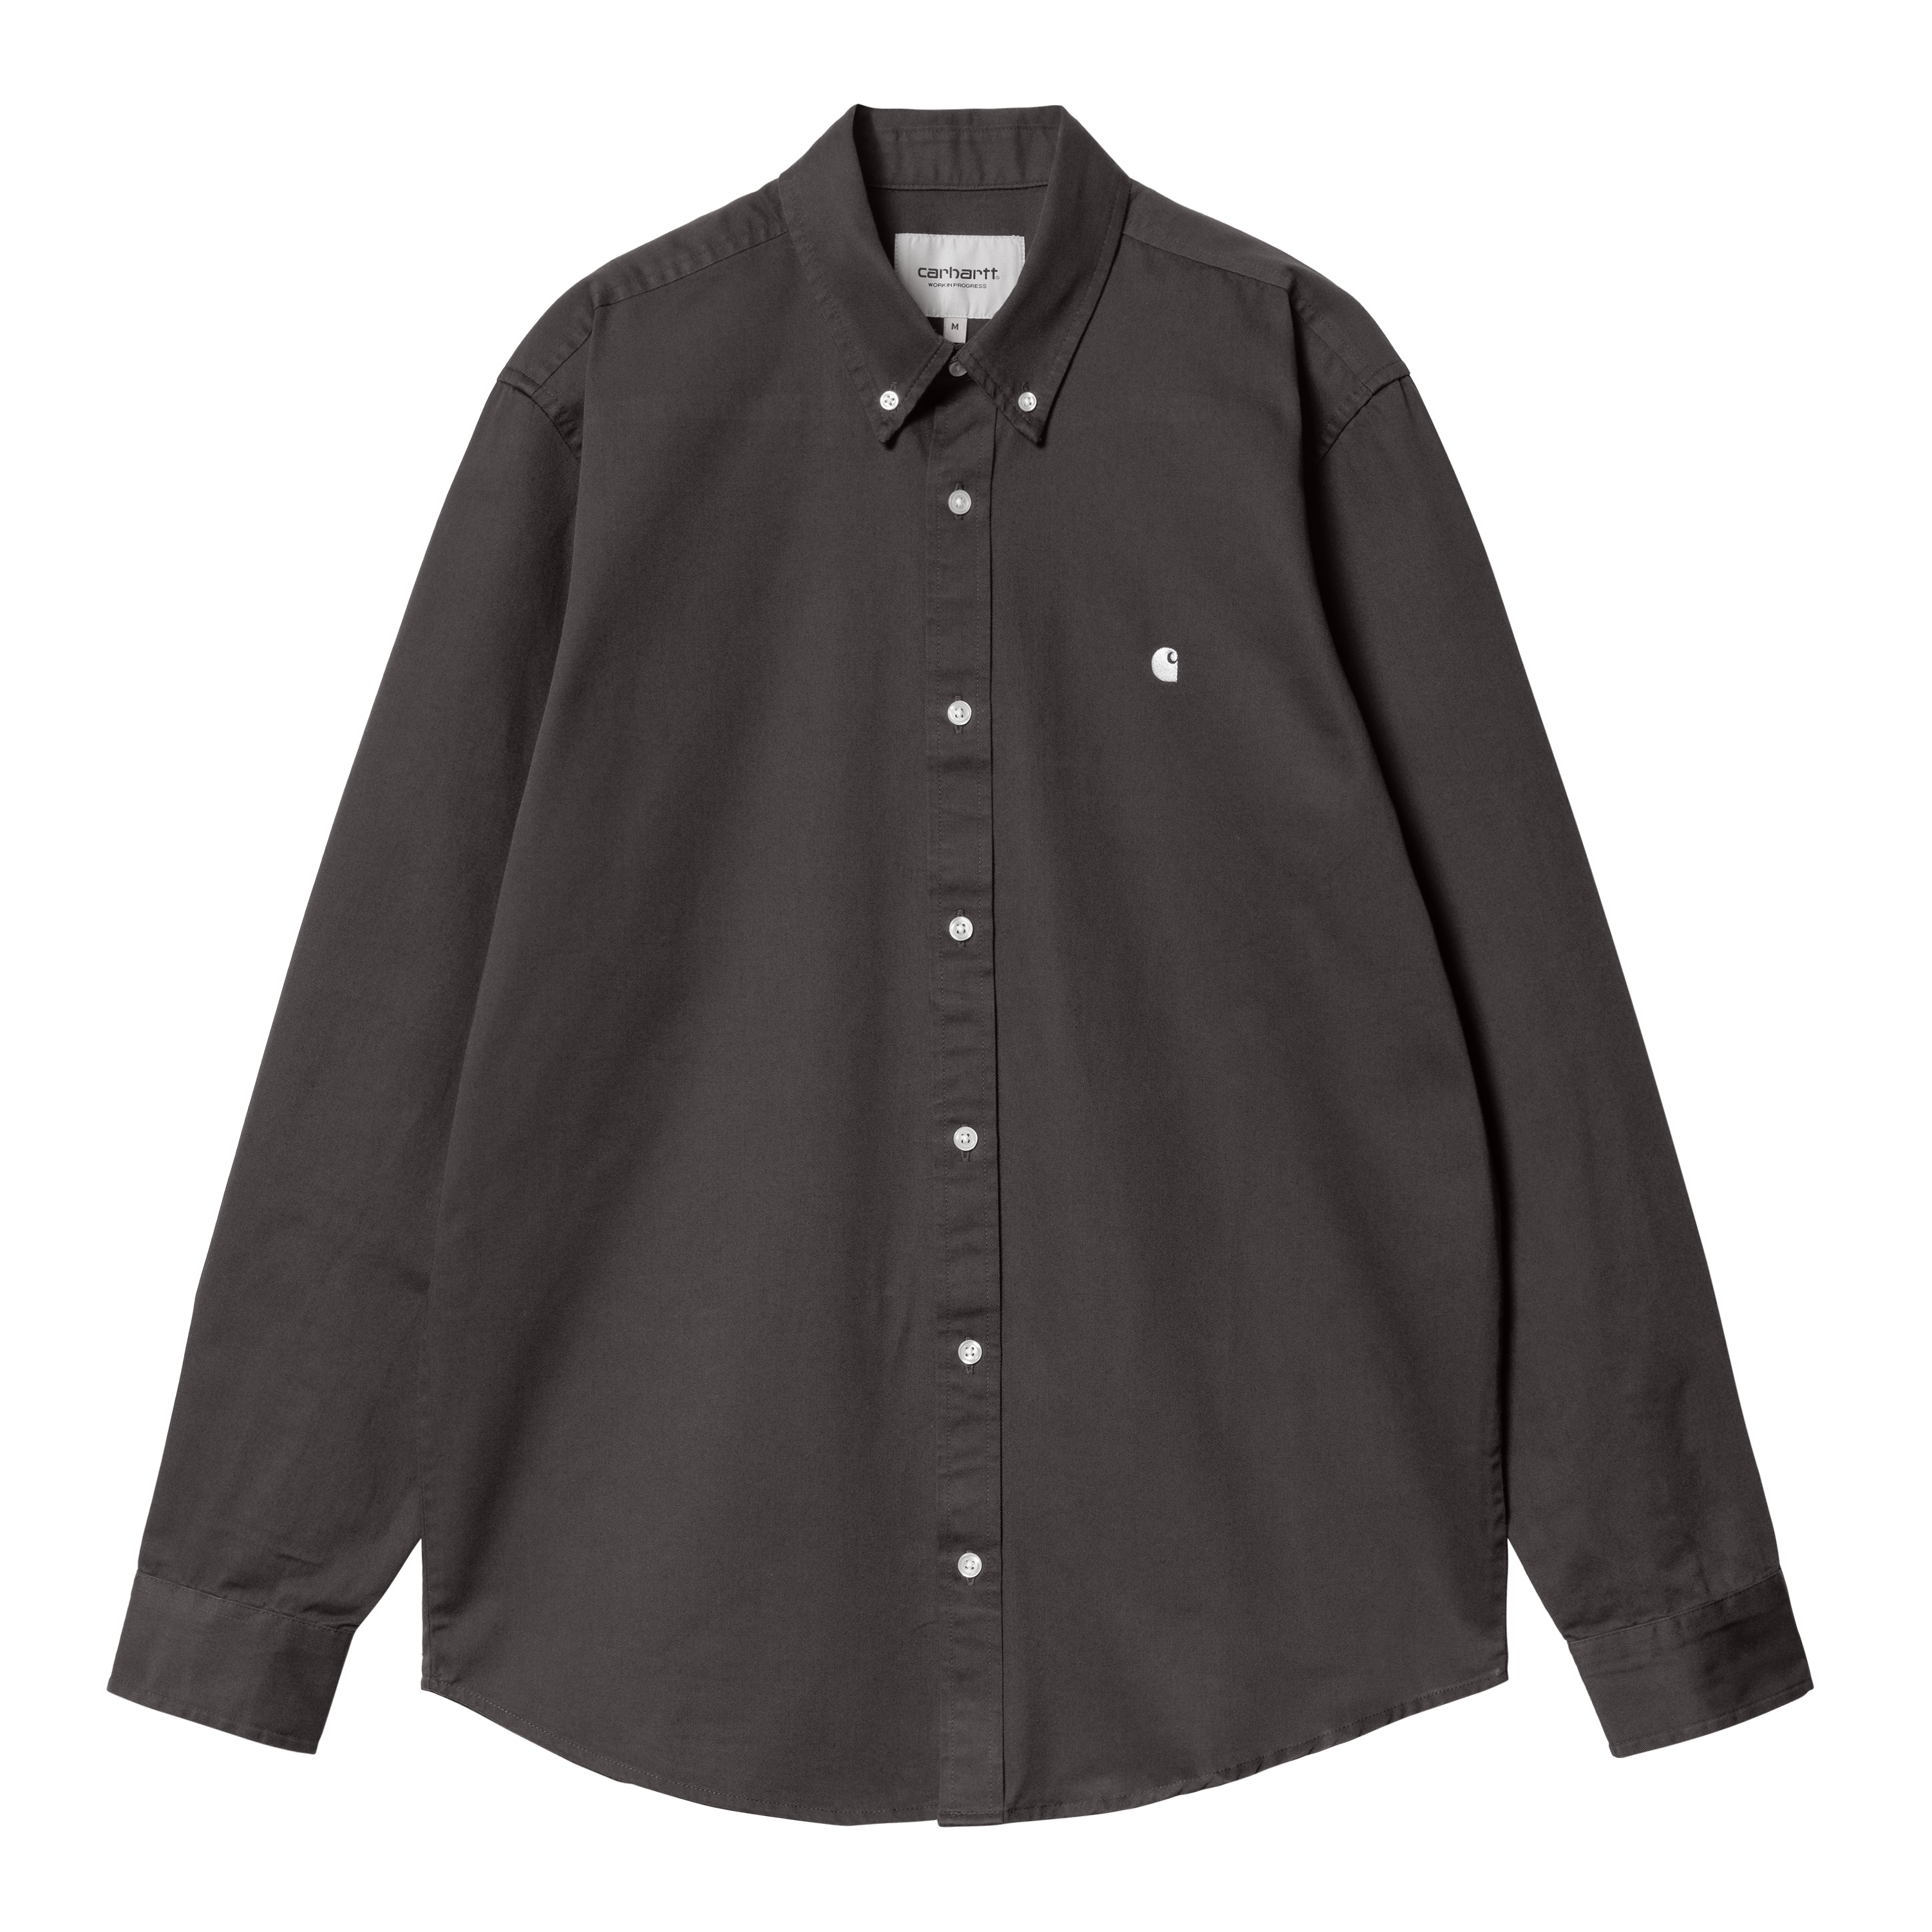 Carhartt WIP Long Sleeve Madison Shirt in Schwarz